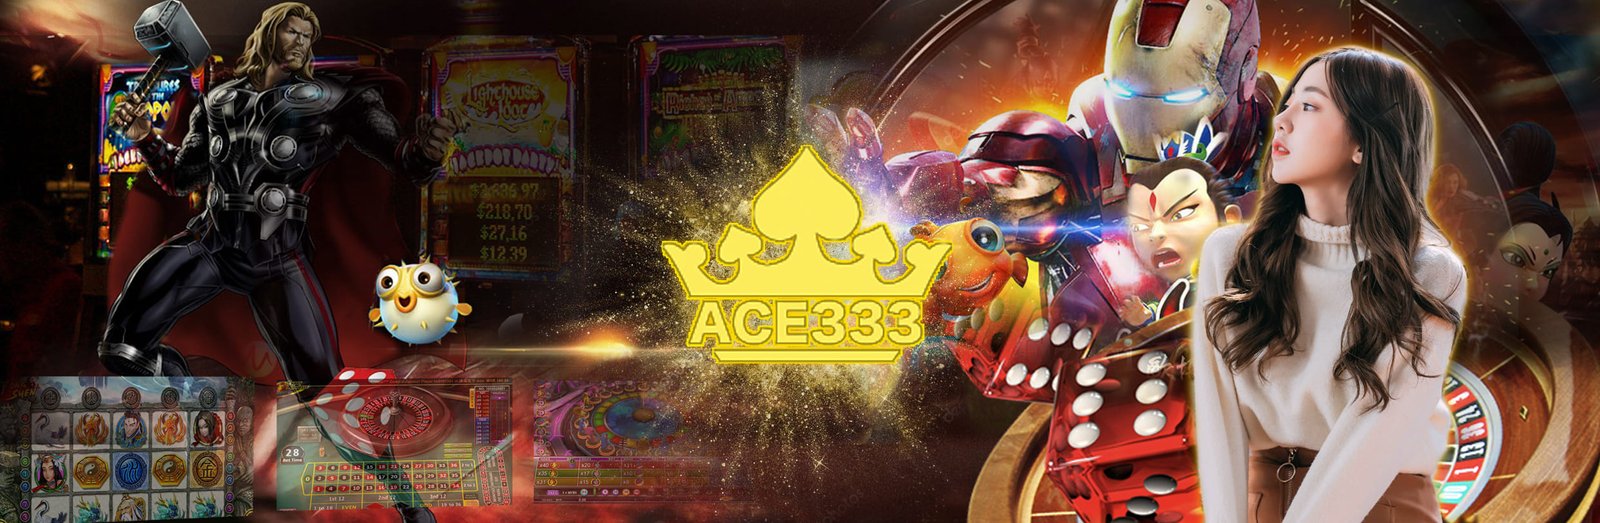 Ace333boom